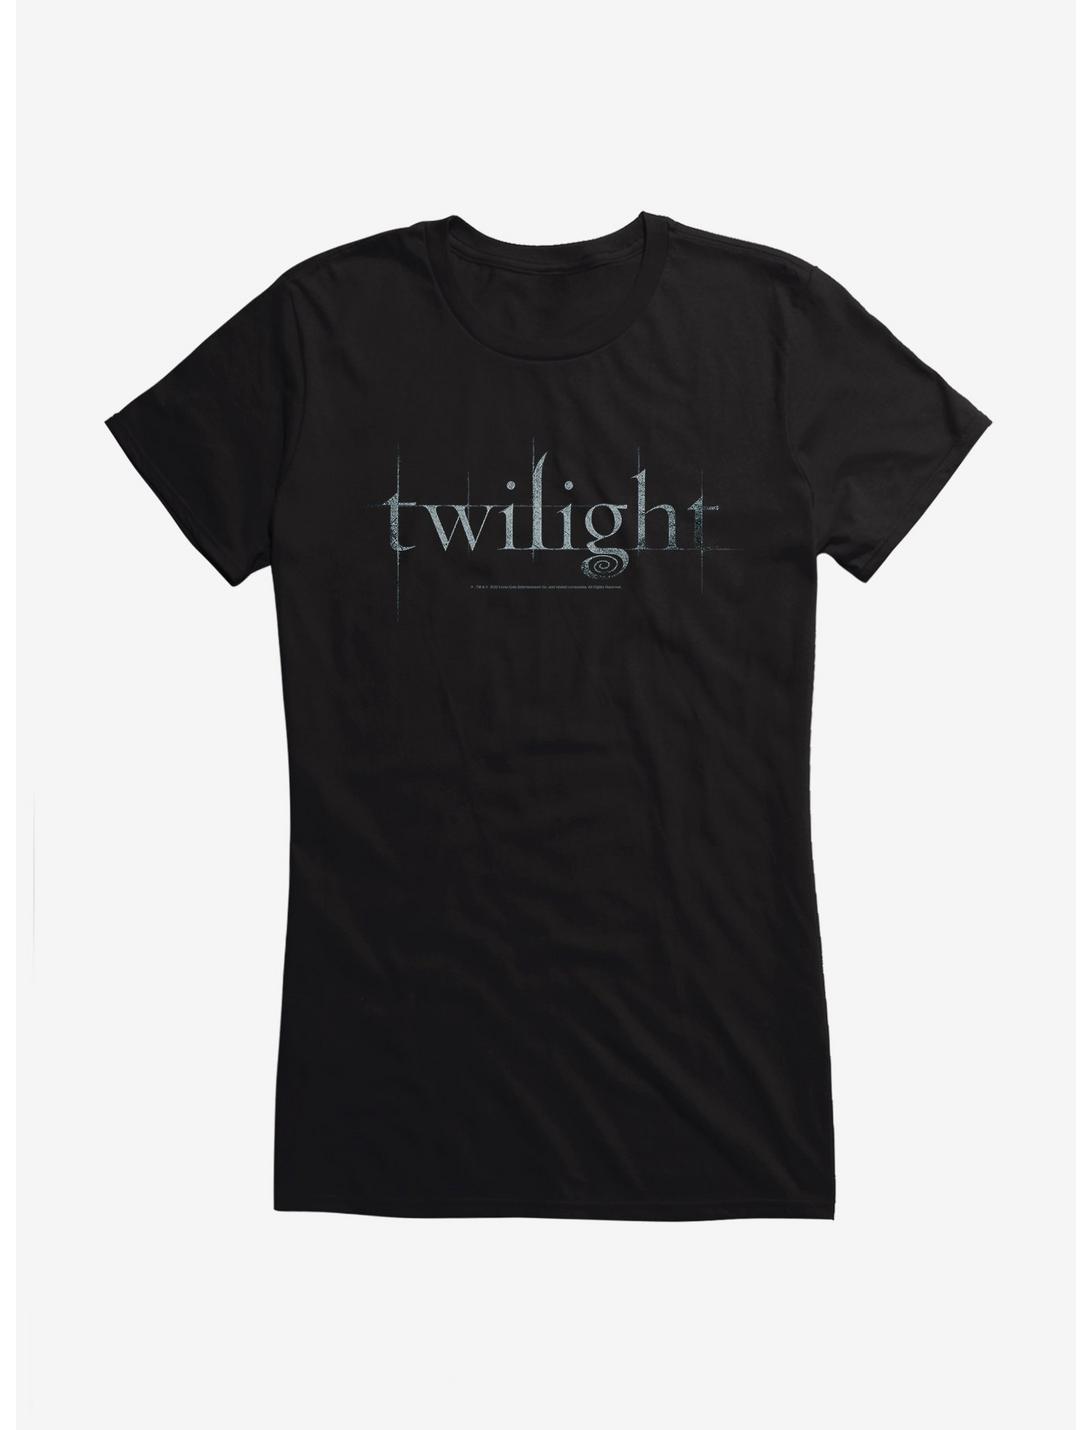 Twilight Logo Girls T-Shirt, BLACK, hi-res